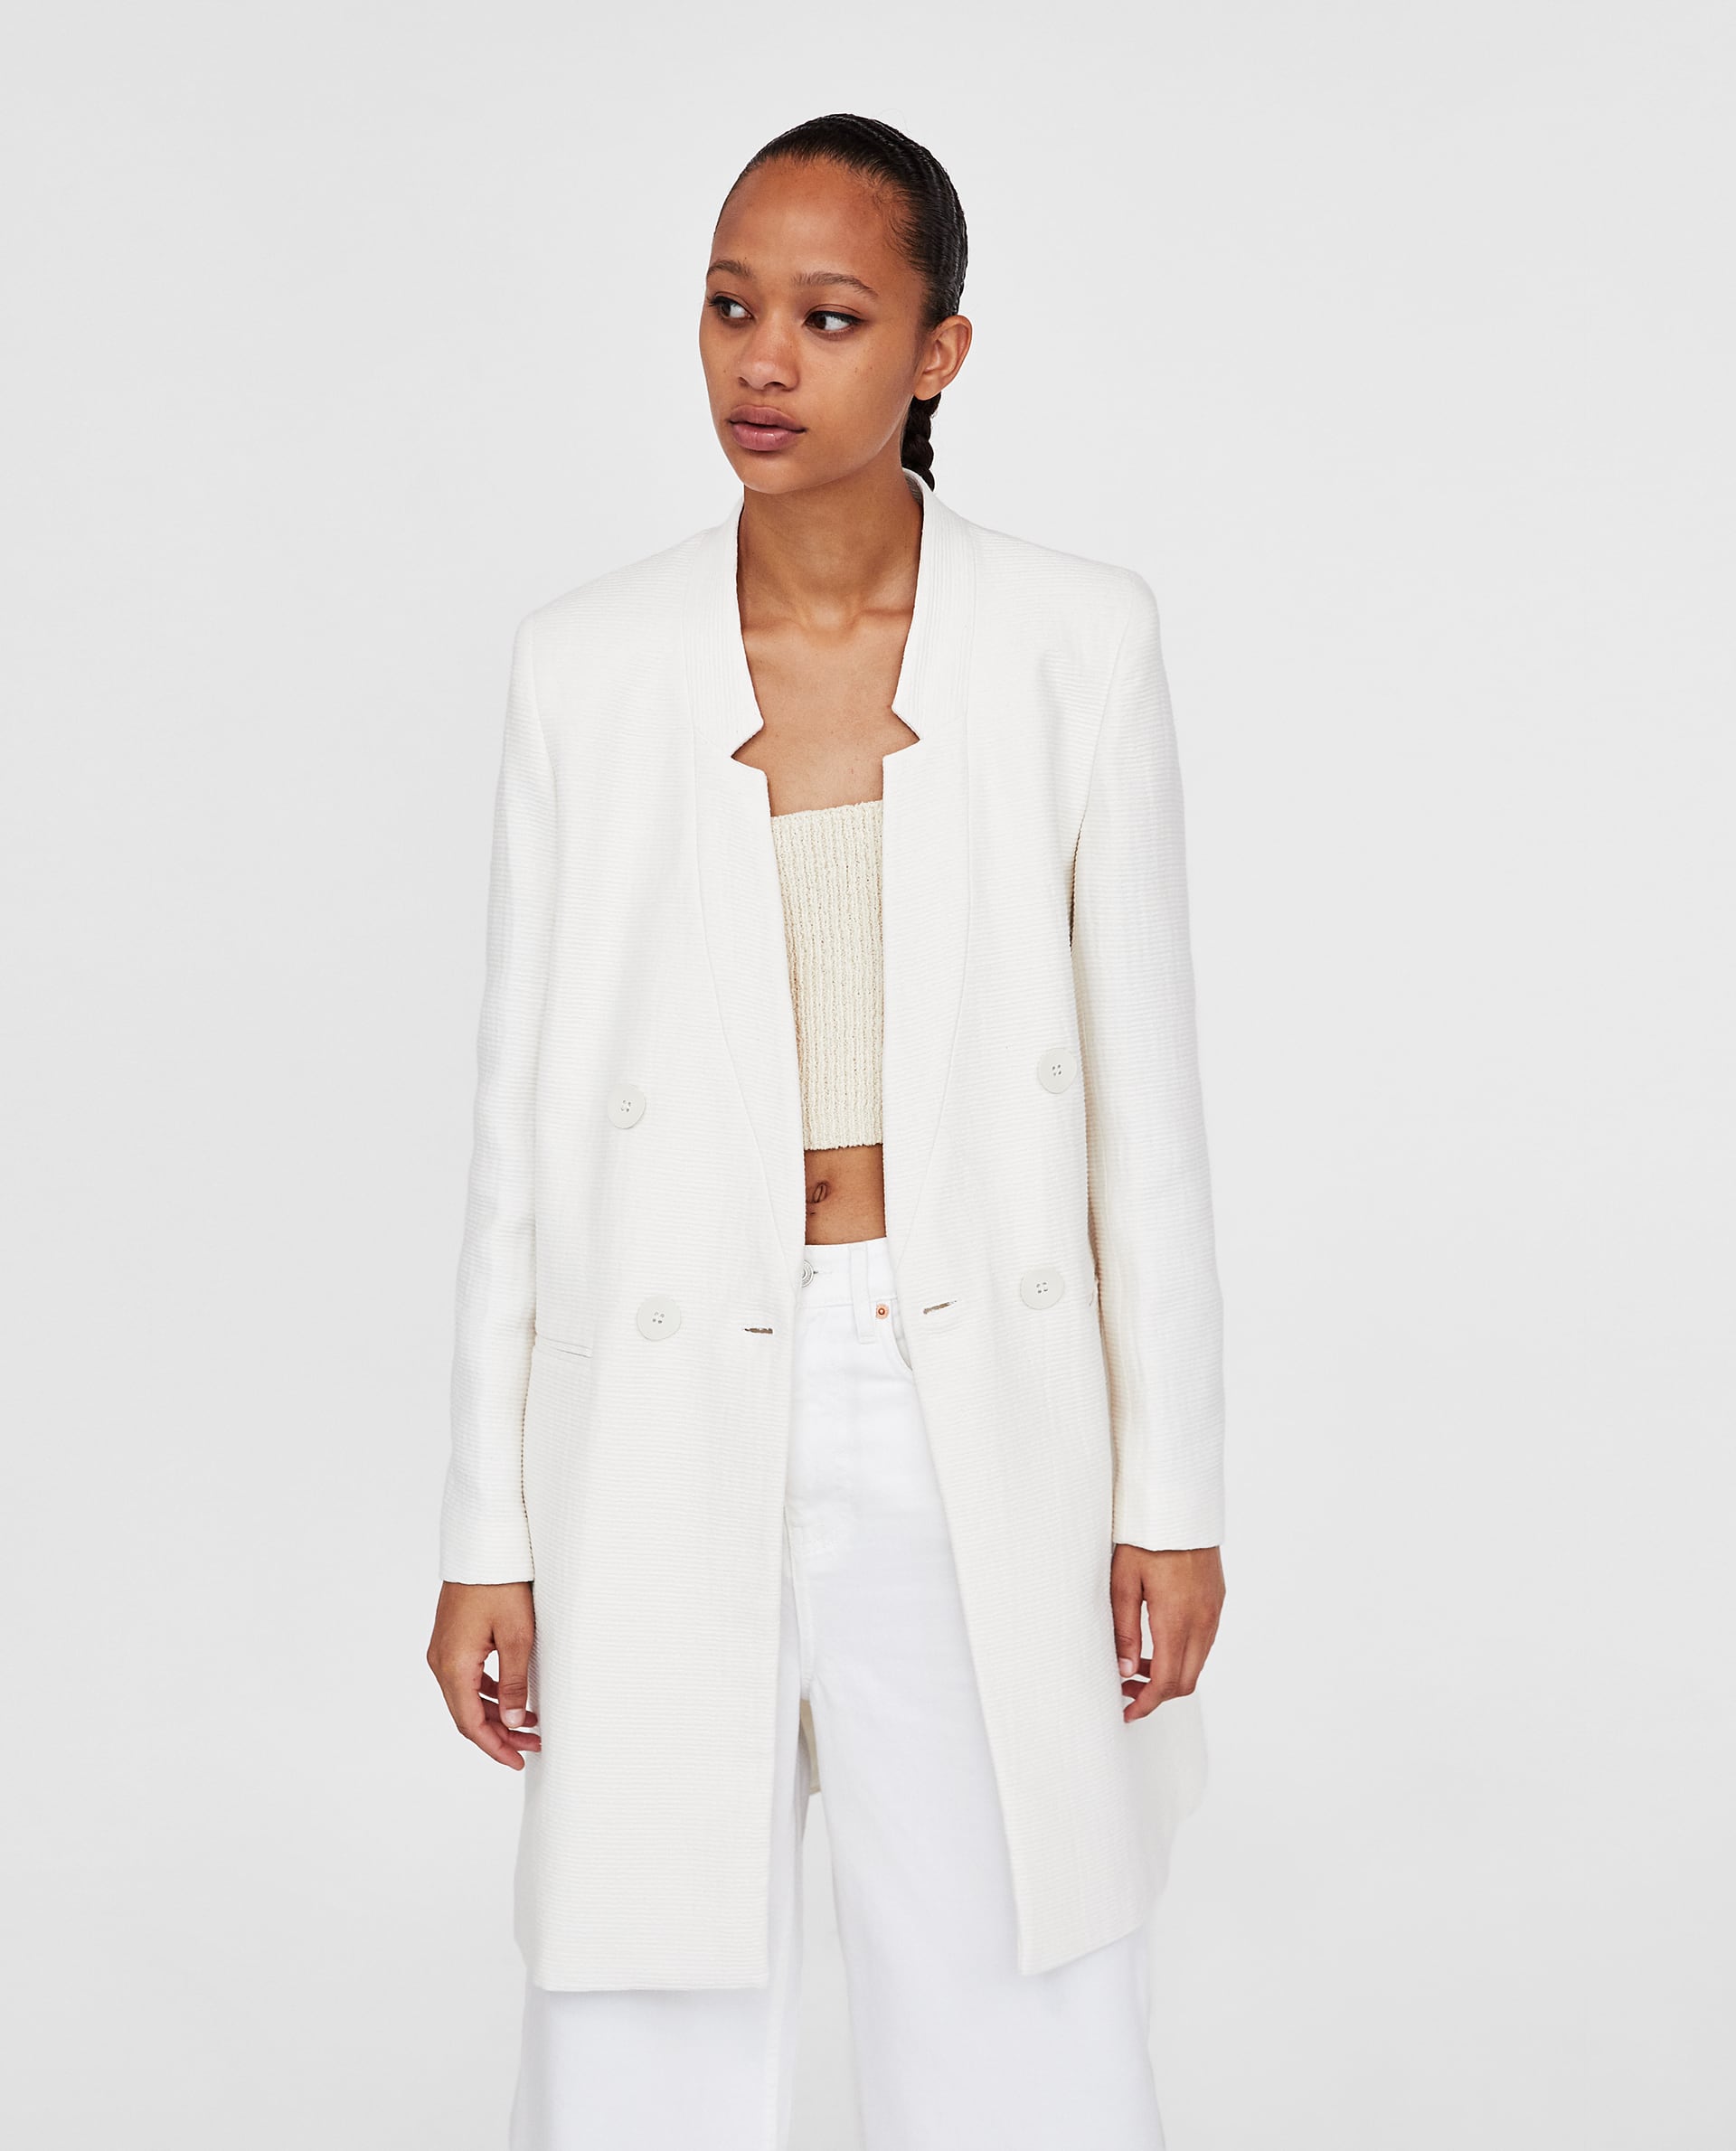 Cappotto bianco Zara da 59,95 EUR a 29,99 EUR